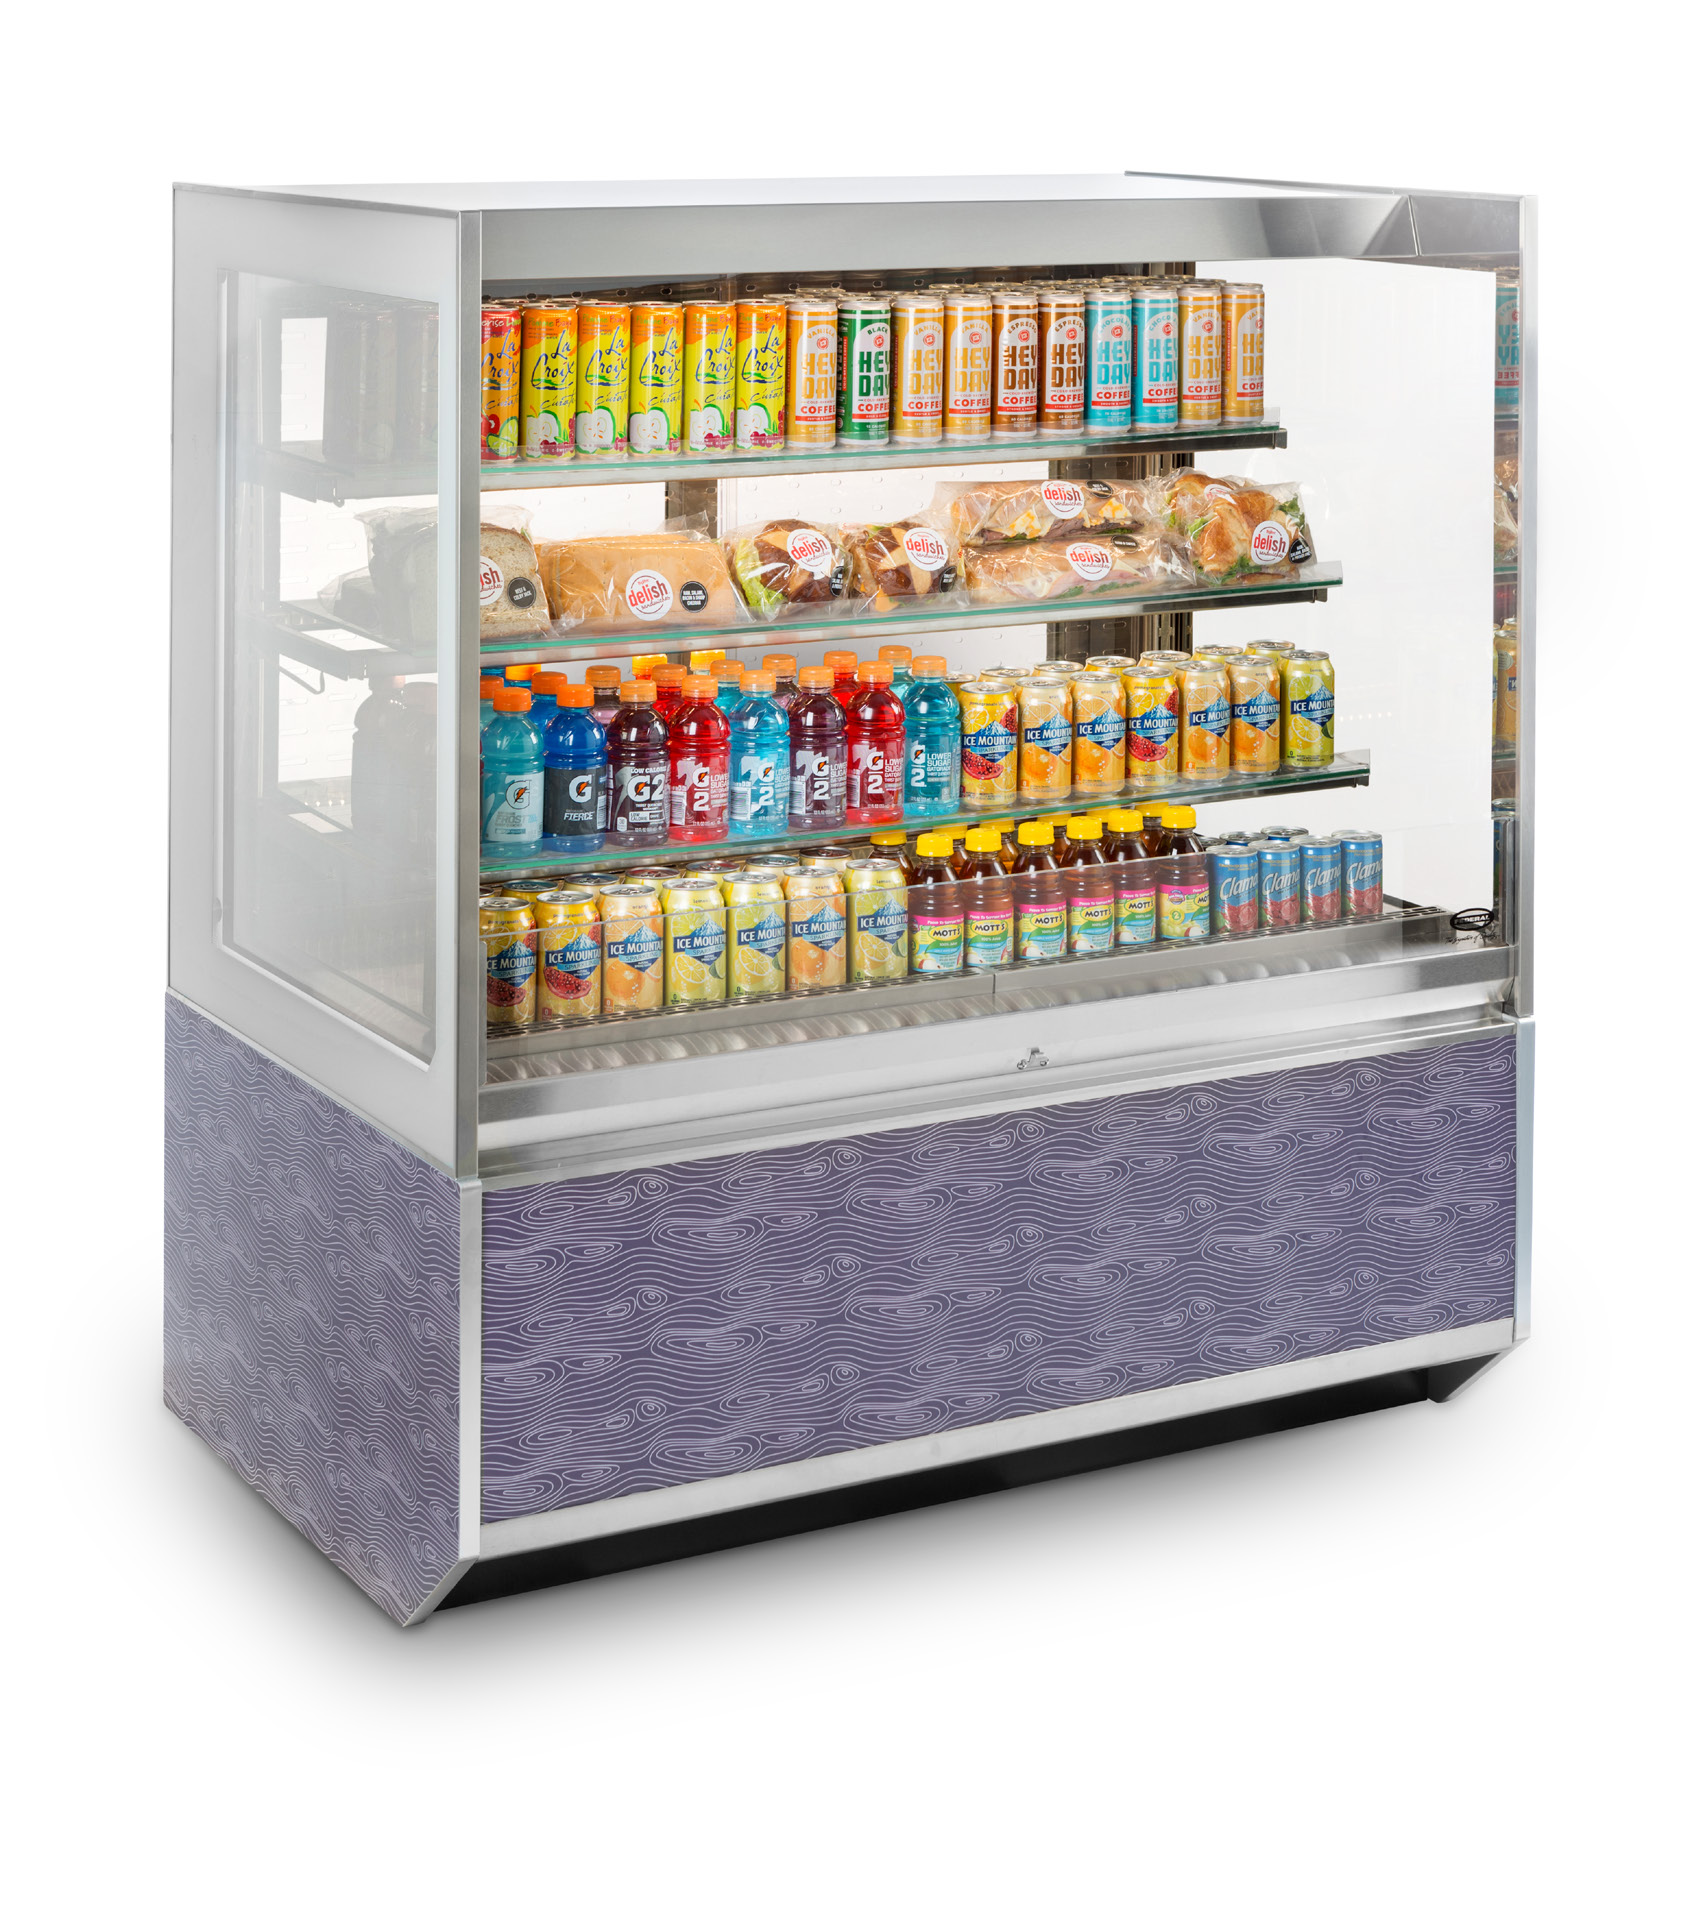 itrss3626-b18-italian-glass-refrigerated-self-serve-merchandiserabc9928d2d90456eb03ba16c9044e56f1